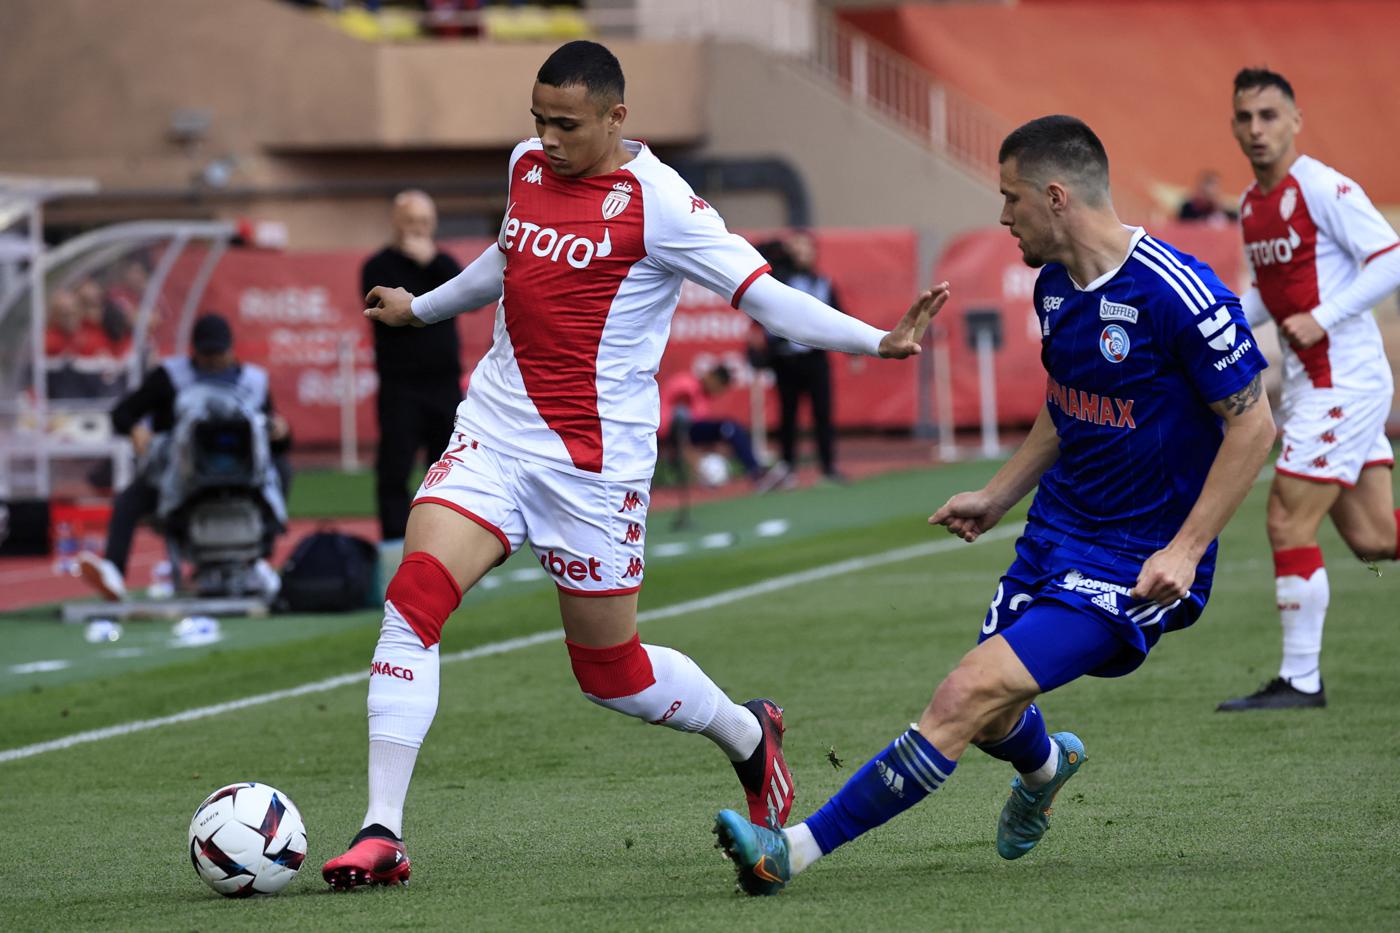 Monaco - Strasbourg - 4:3. French Championship, 29th round. Match review, statistics